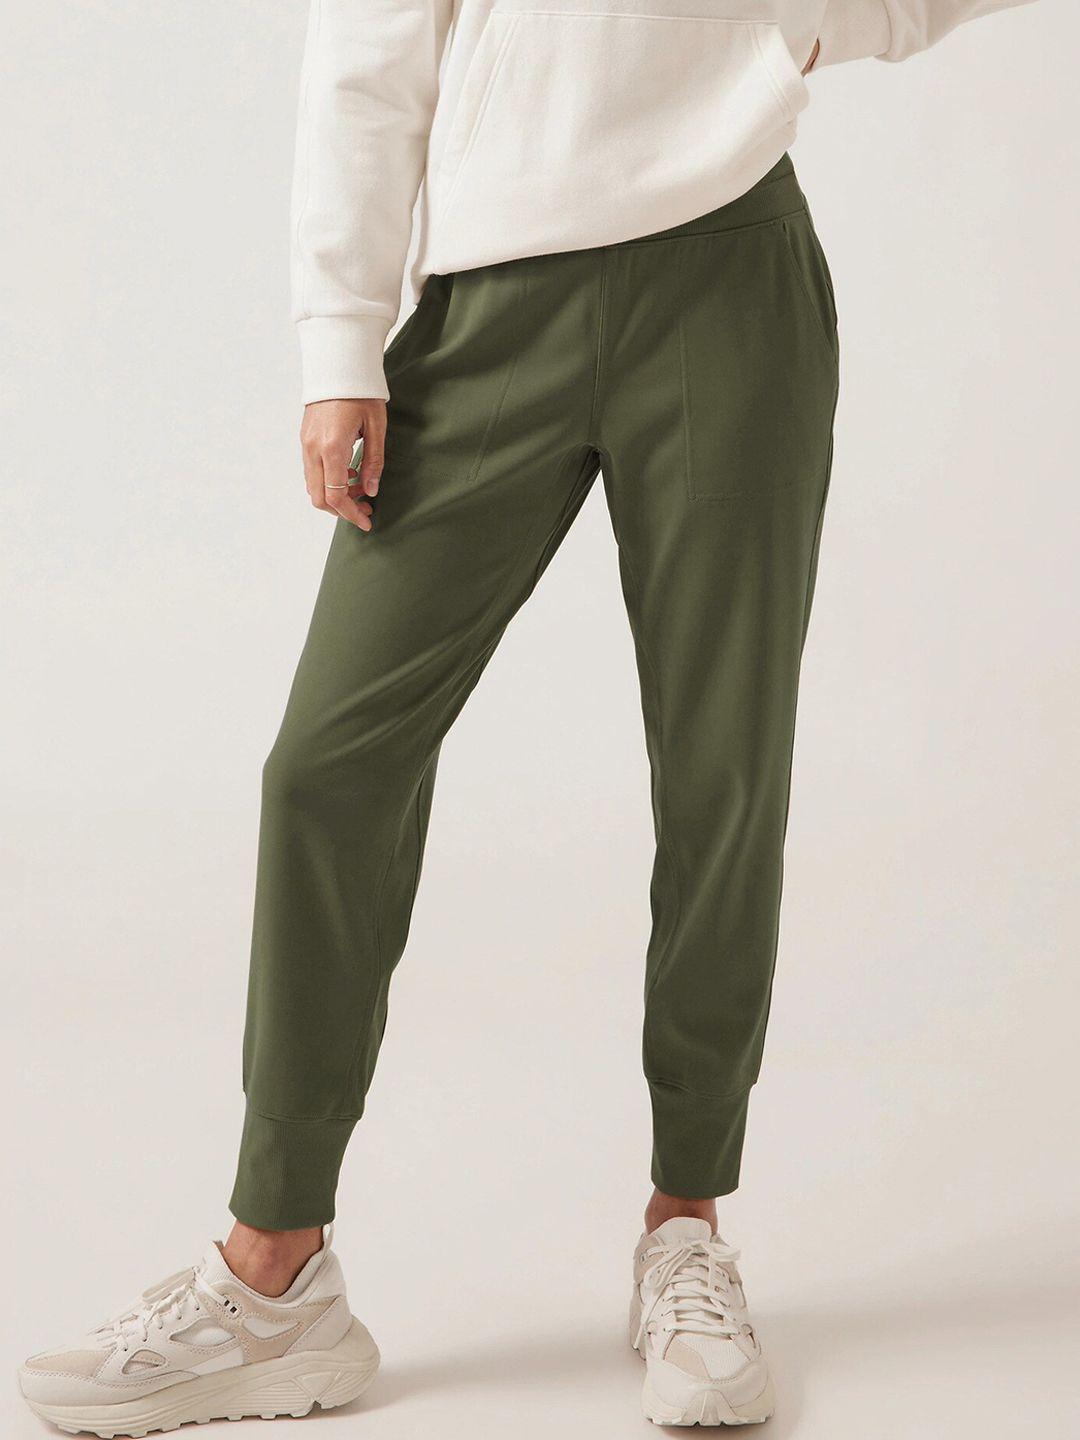 stylecast women green slim fit joggers trousers